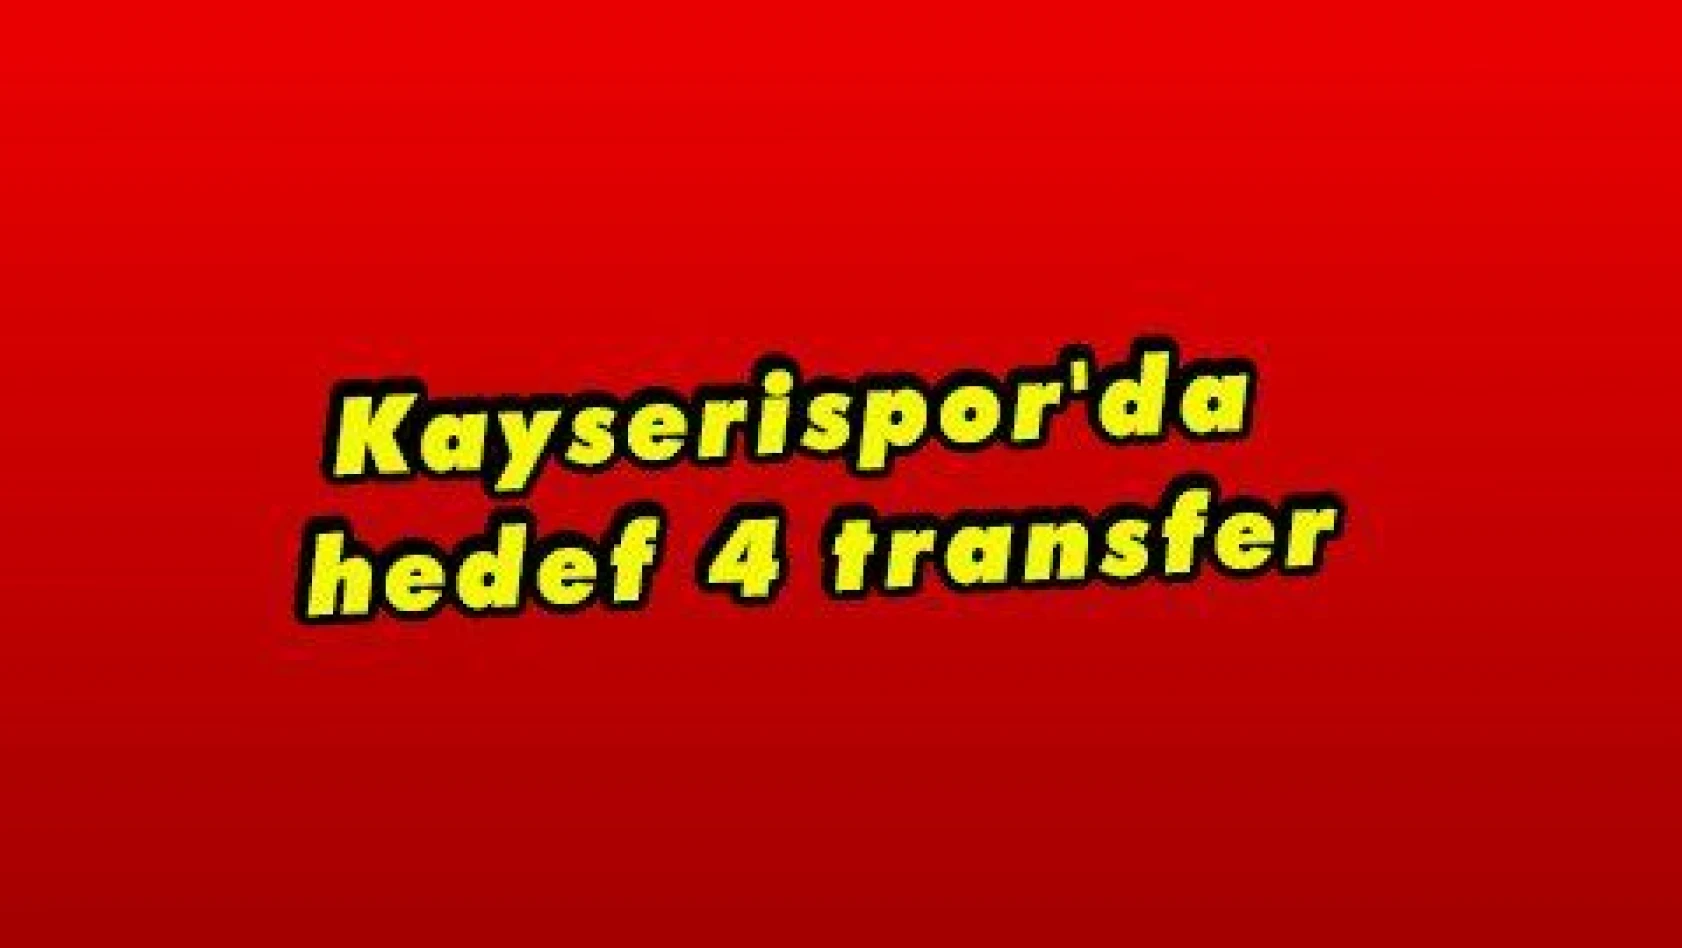 Kayserispor'da hedef 4 transfer